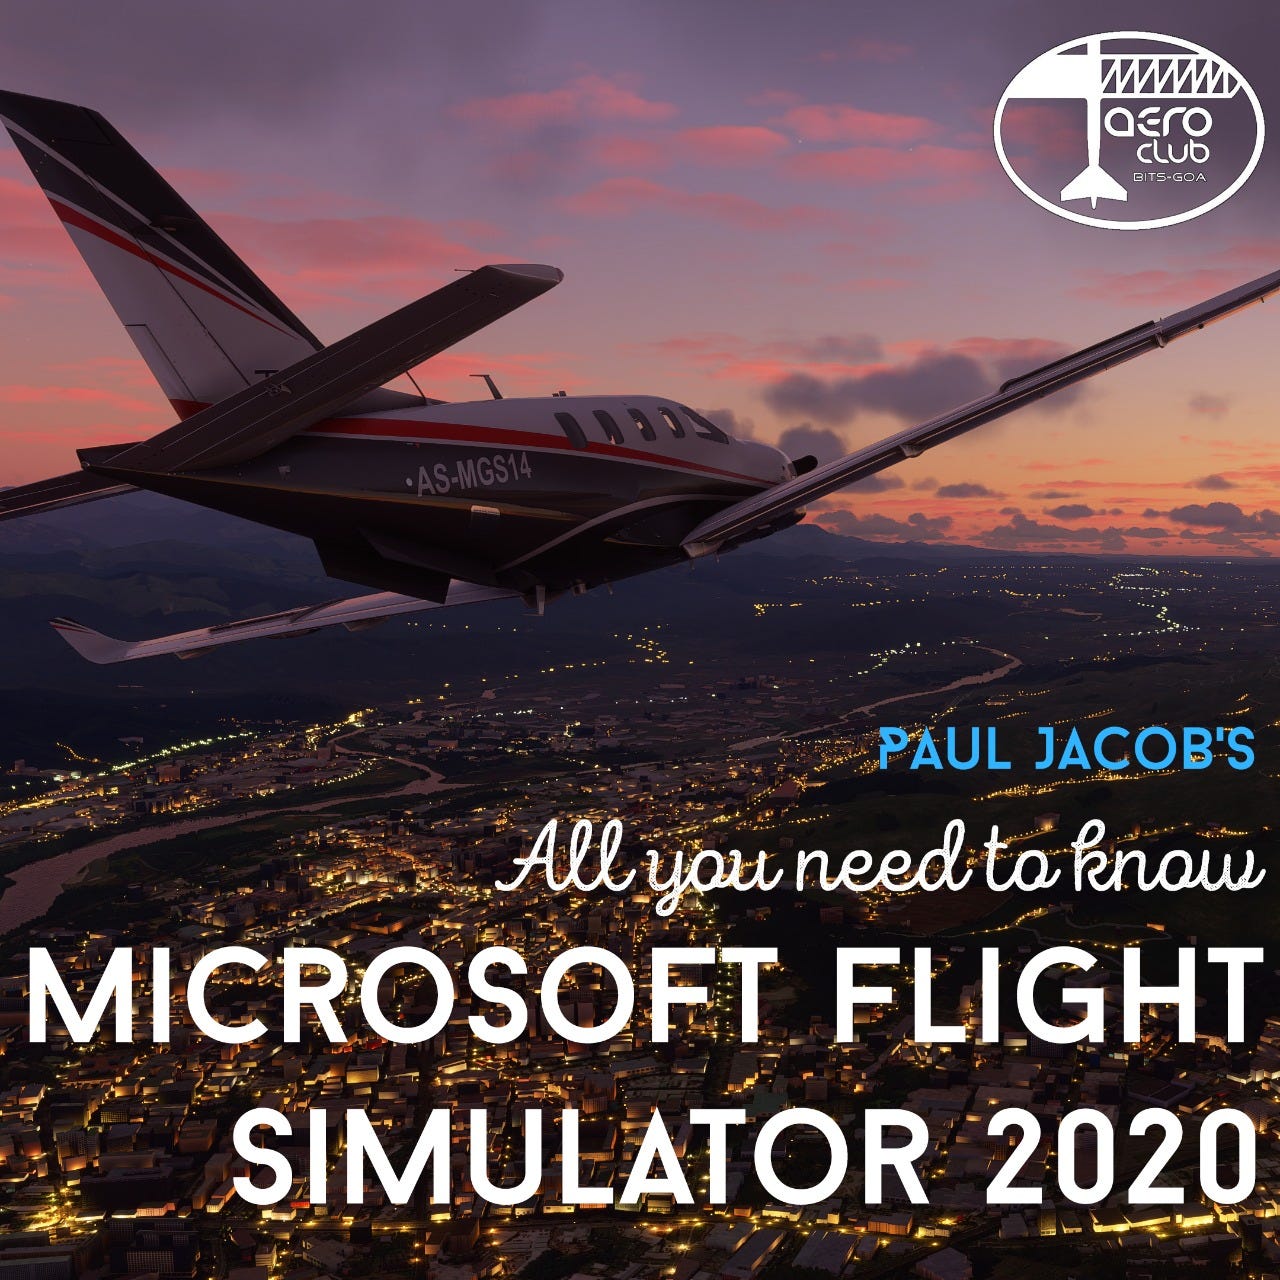 All aircraft - Microsoft Flight Simulator 2020